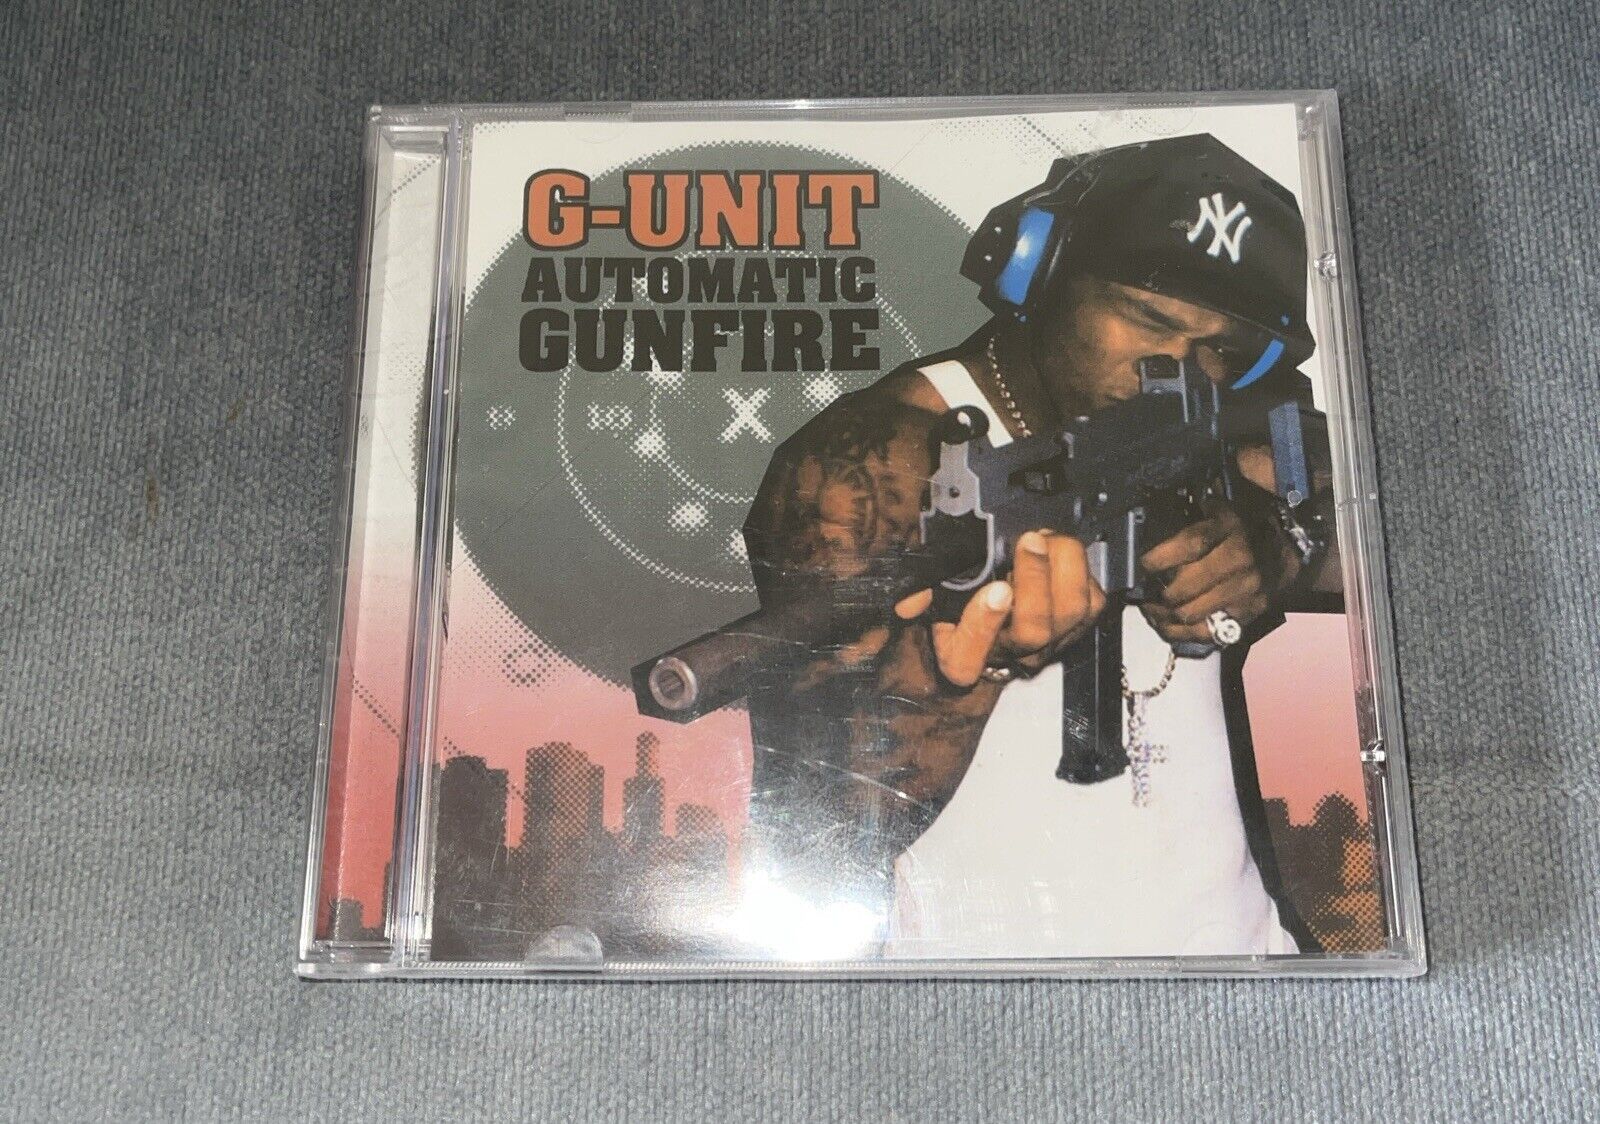 G-Unit Automatic Gunfire New Sealed Very Rare Mixtape CD